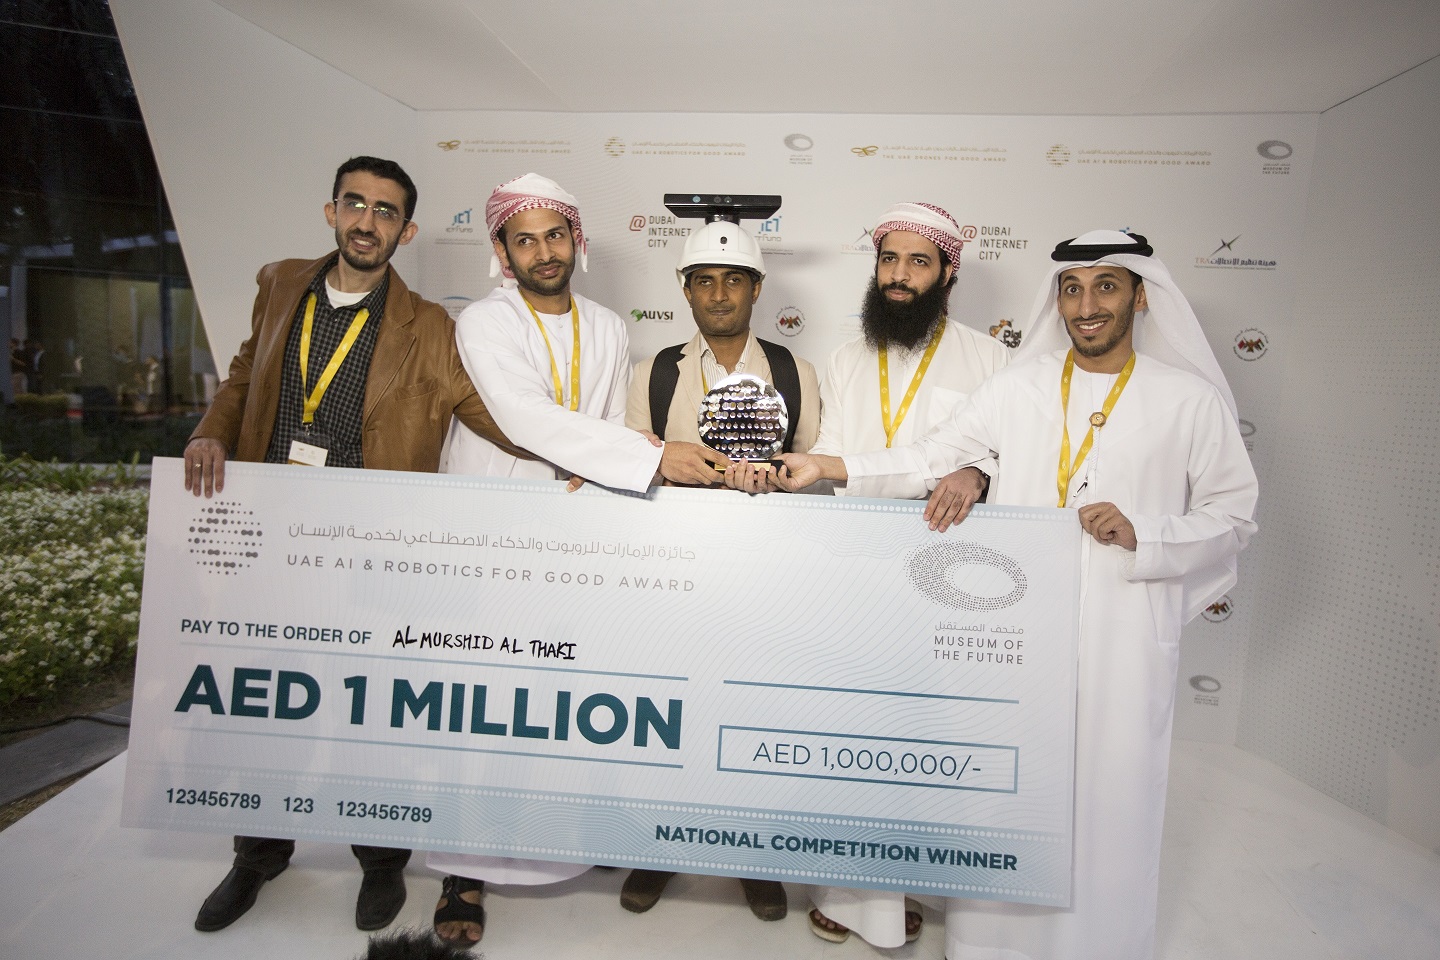 Mohammed bin Rashid awards winners of ‘UAE Drones for Good Award’ and ‘UAE AI & Robotics Award for Good’-BEX_2272-1